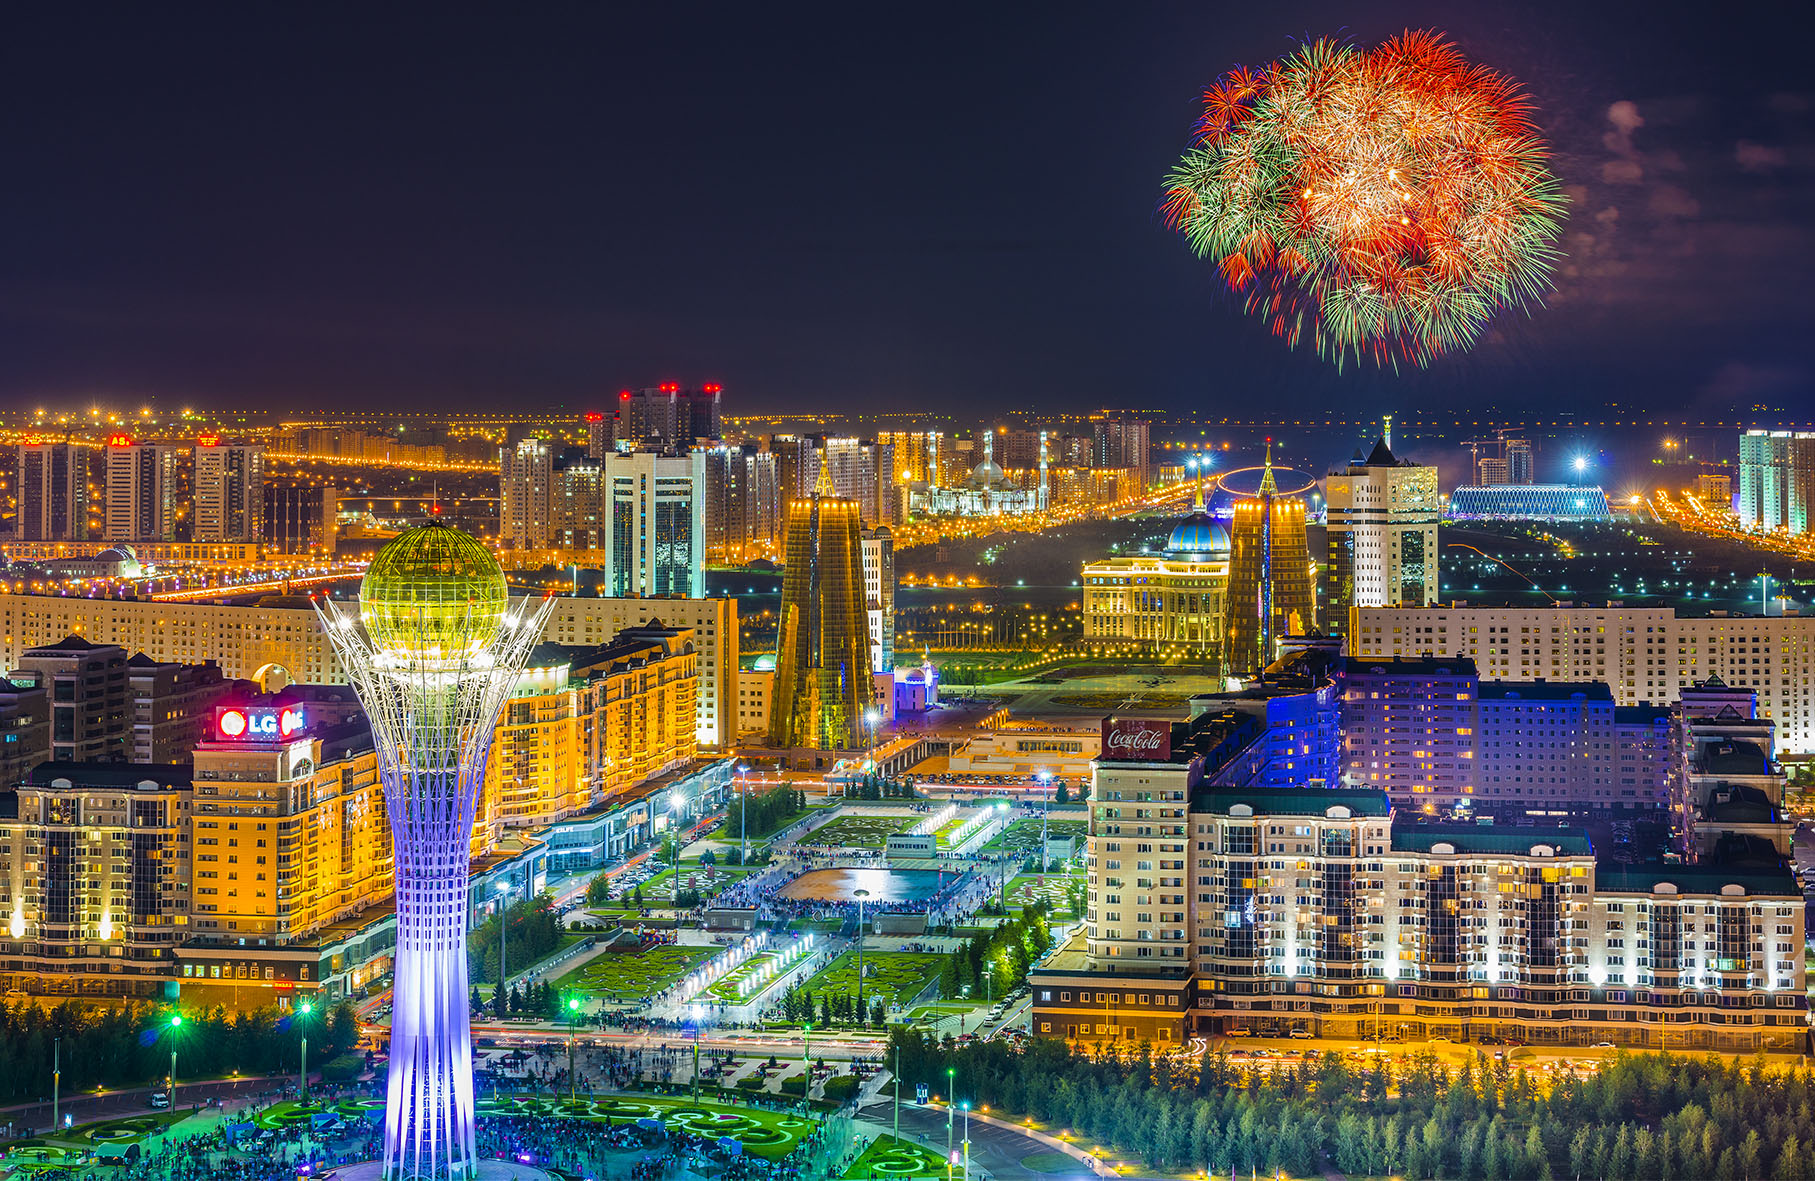 Info Shymkent - Happy New Year 2022 - Fireworks over Kazakhstan's capital Nur-Sultan (Photo: Farhat Kabdykairov)